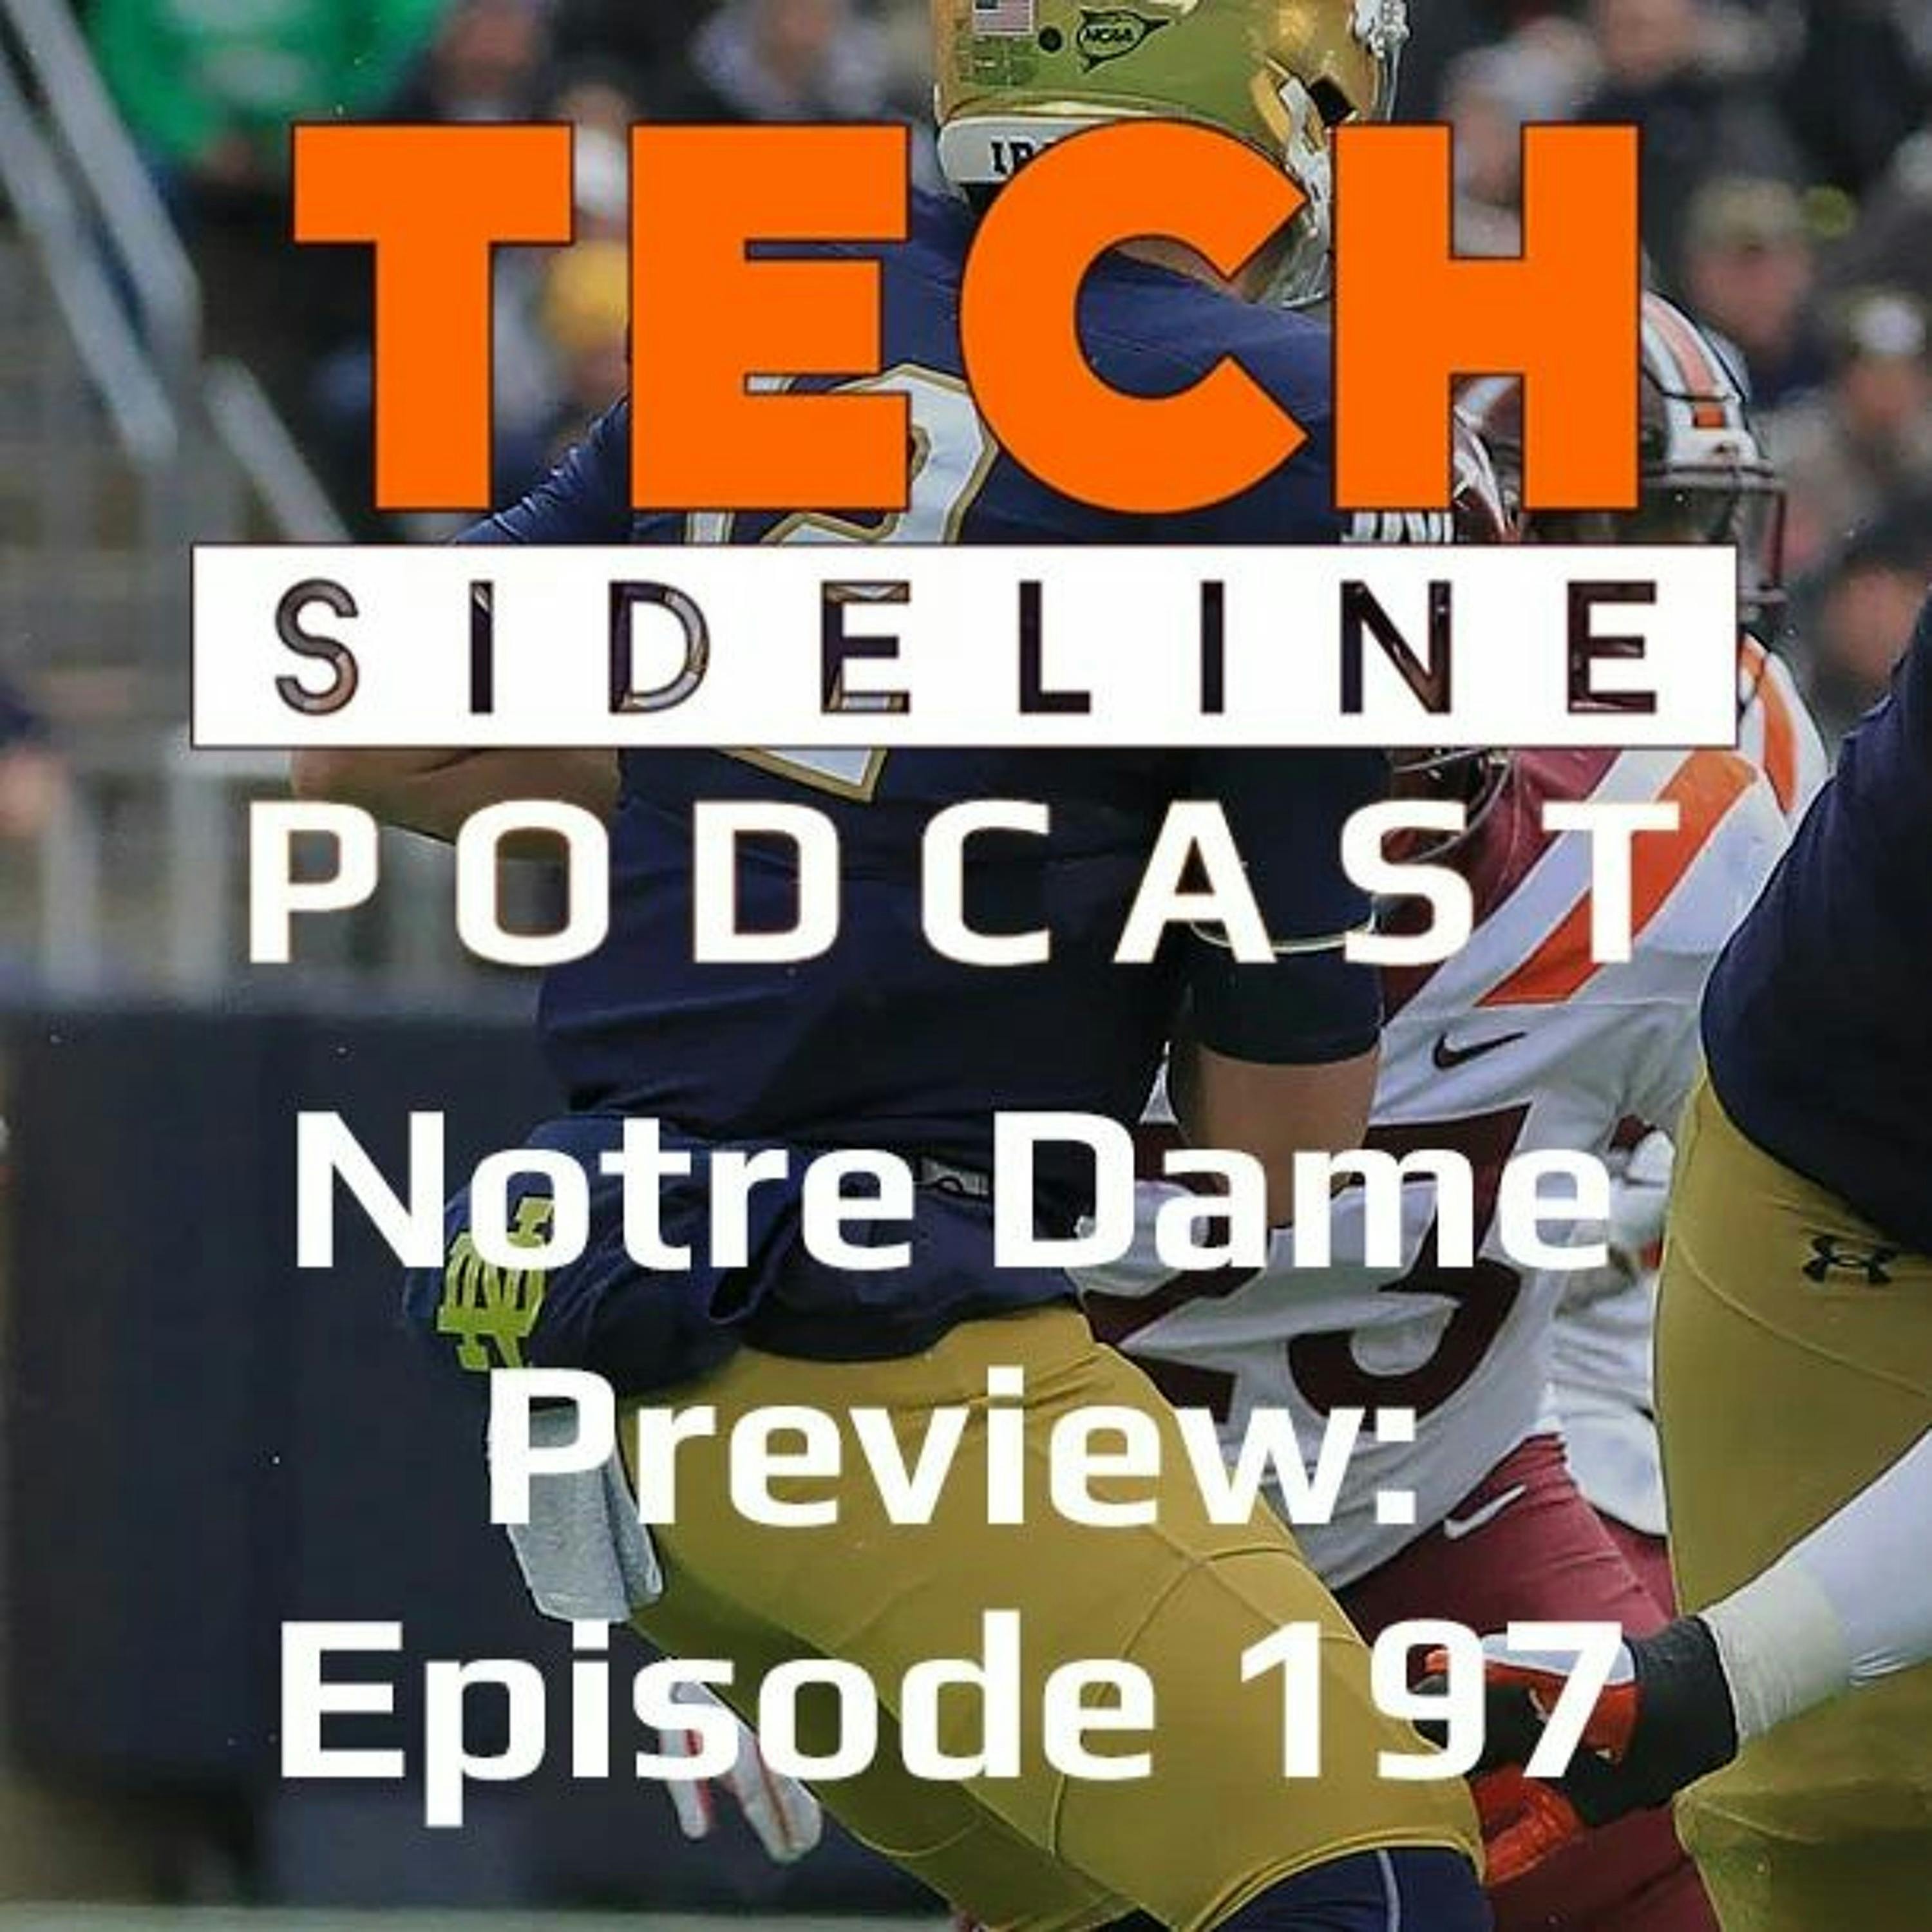 Notre Dame Preivew: Tech Sideline Podcast 197